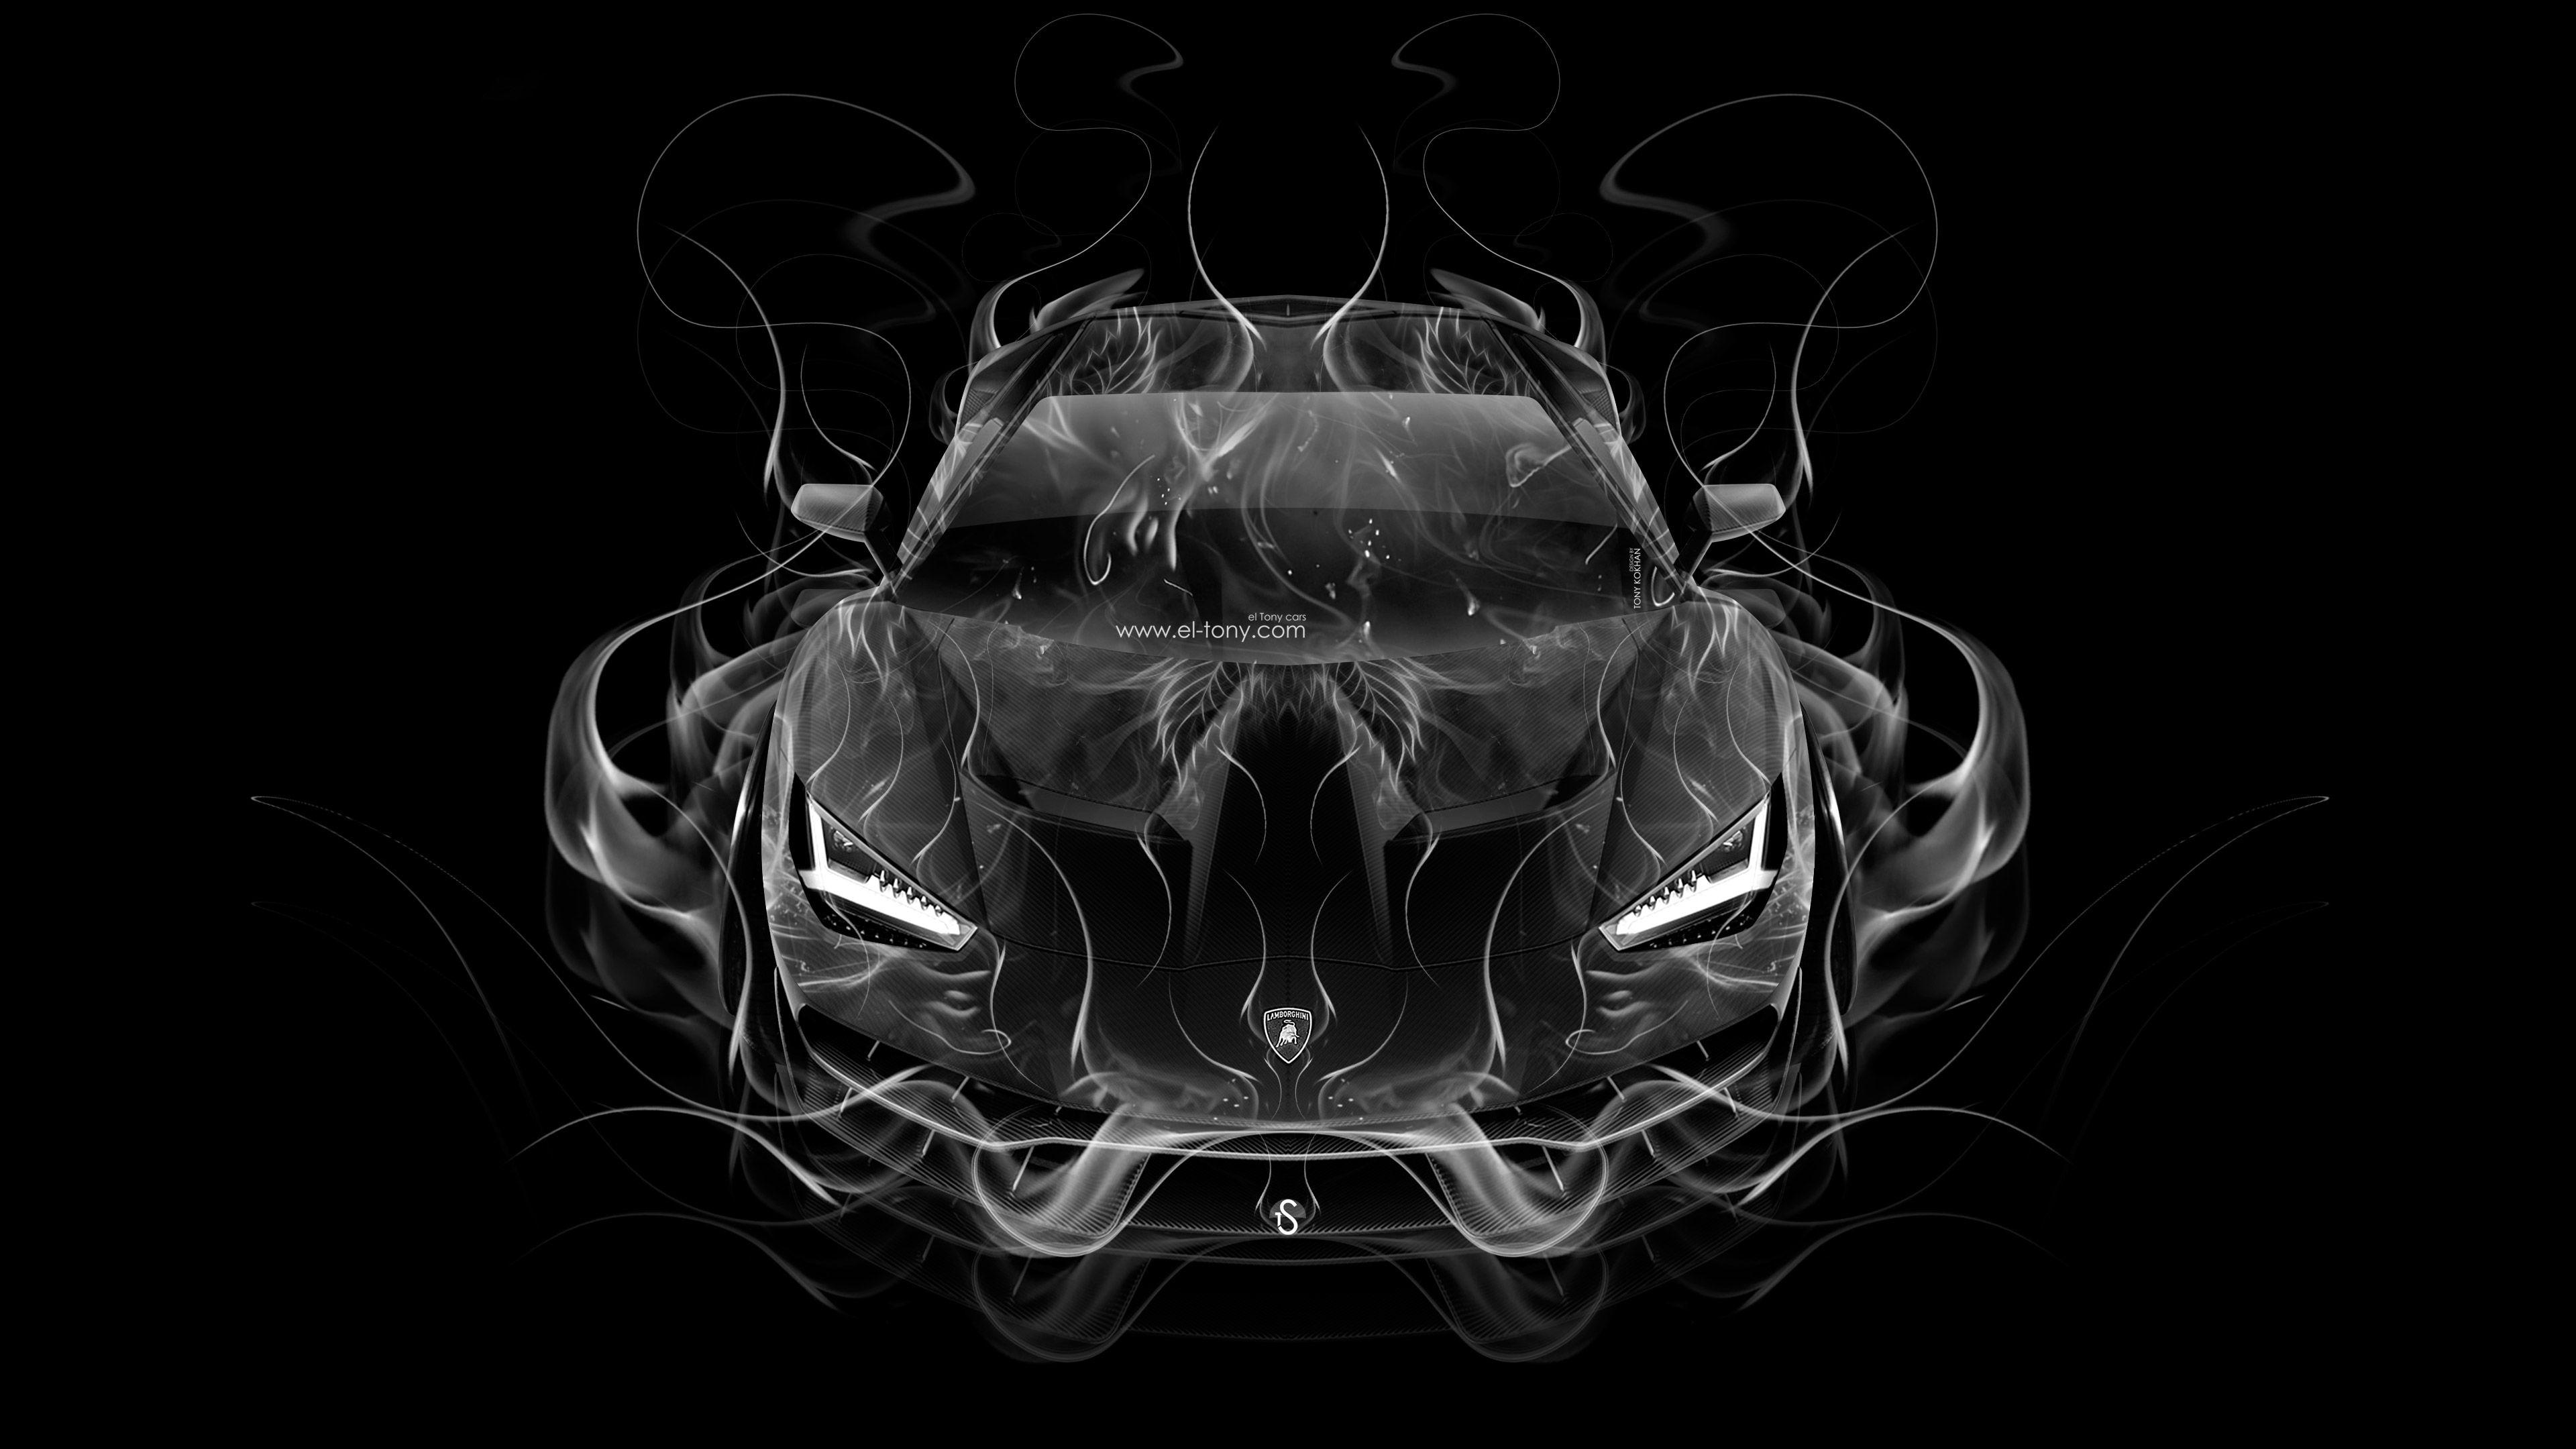 Lamborghini Centenario FrontUp Super Fire Abstract Car 2016